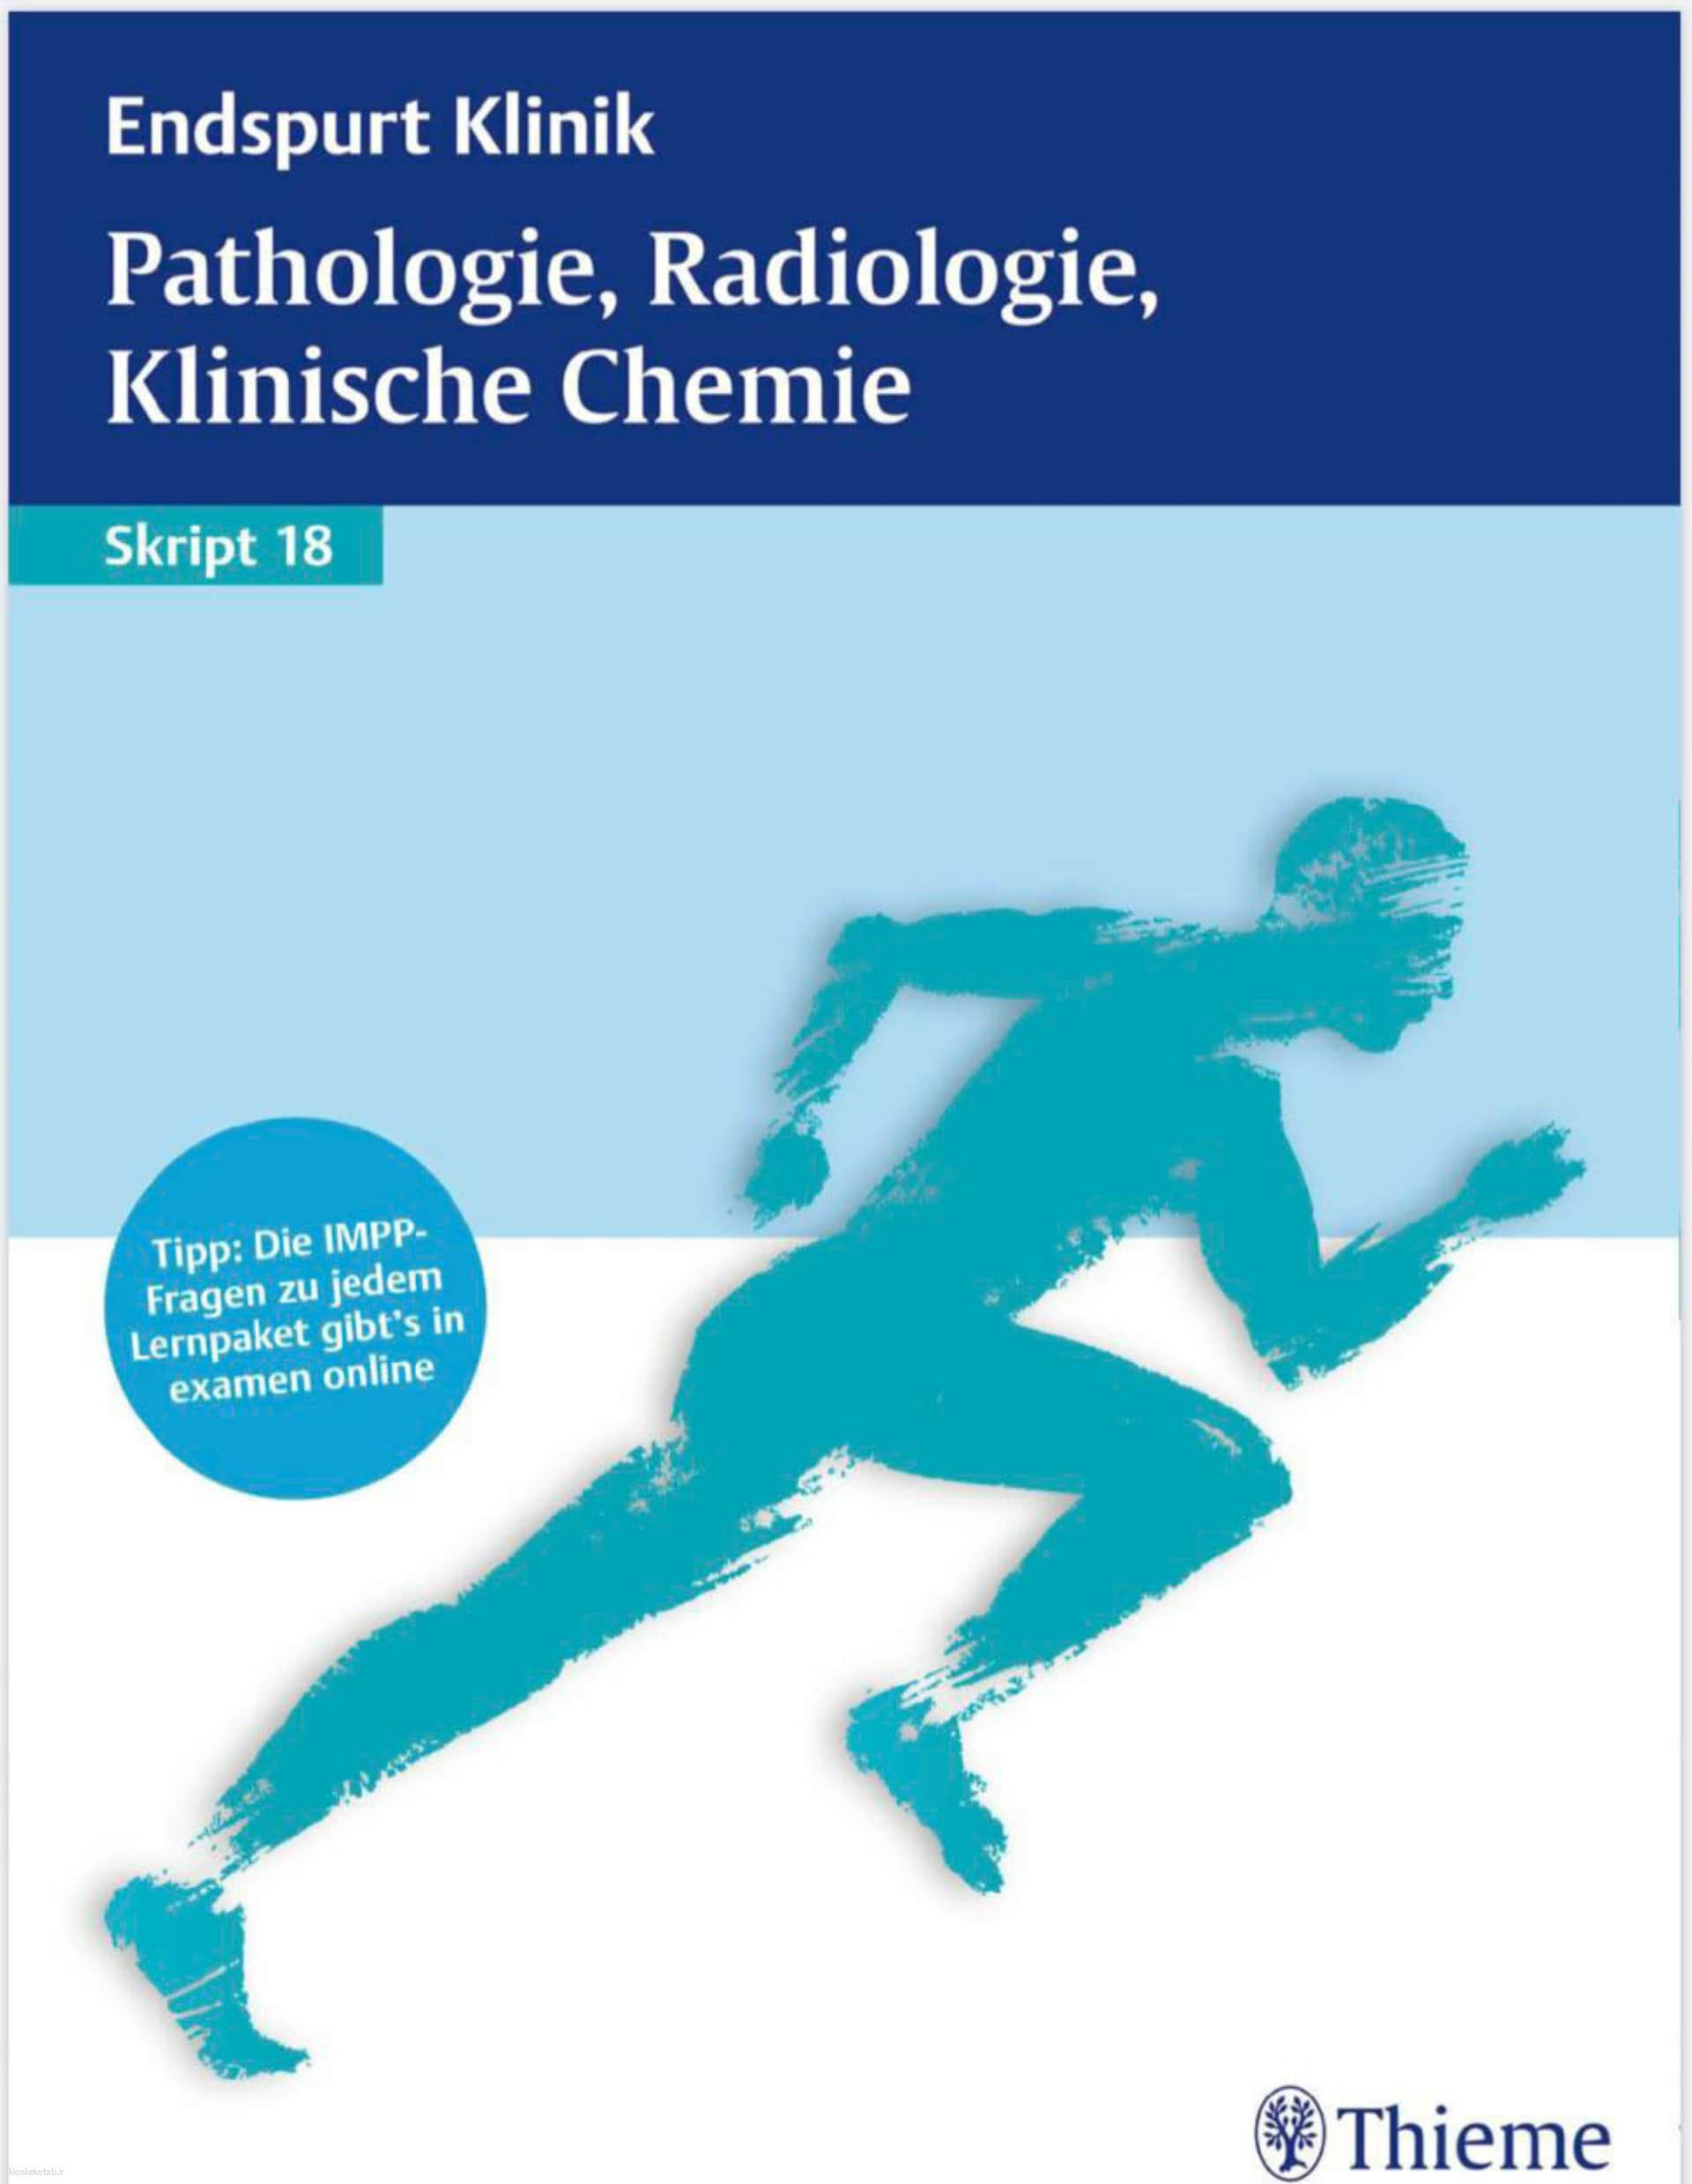 دانلود کتاب المانیpathologie radiologie klinische chemie